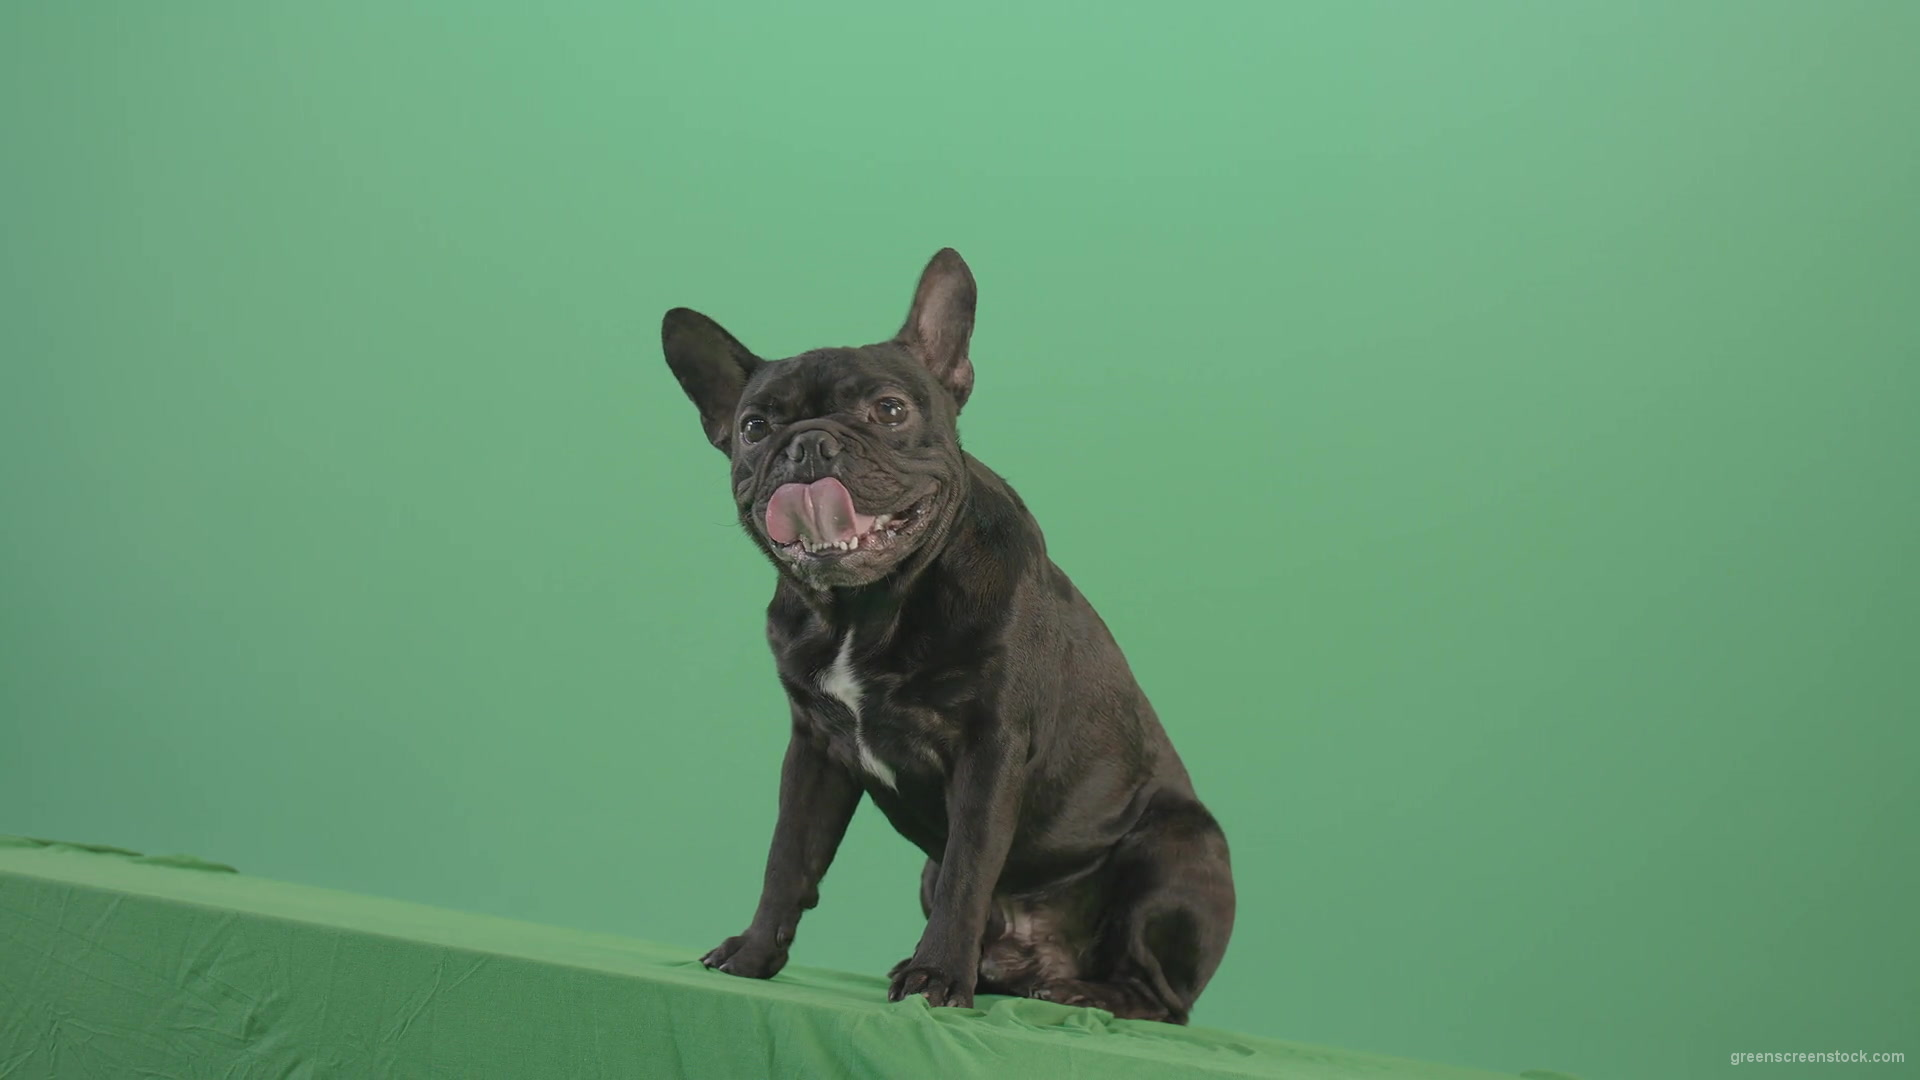 Lazy-french-bulldog-animal-dog-posing-on-green-screen-4K-Video-Footage-1920_004 Green Screen Stock